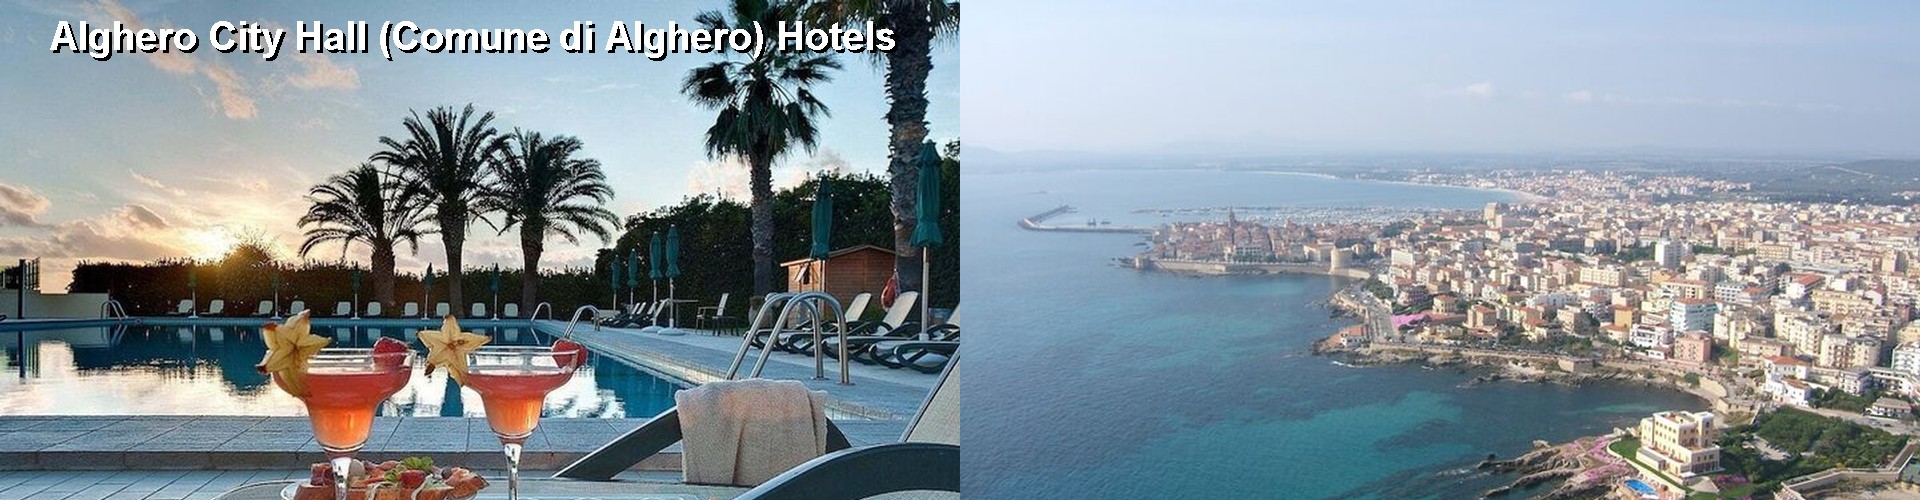 5 Best Hotels near Alghero City Hall (Comune di Alghero)